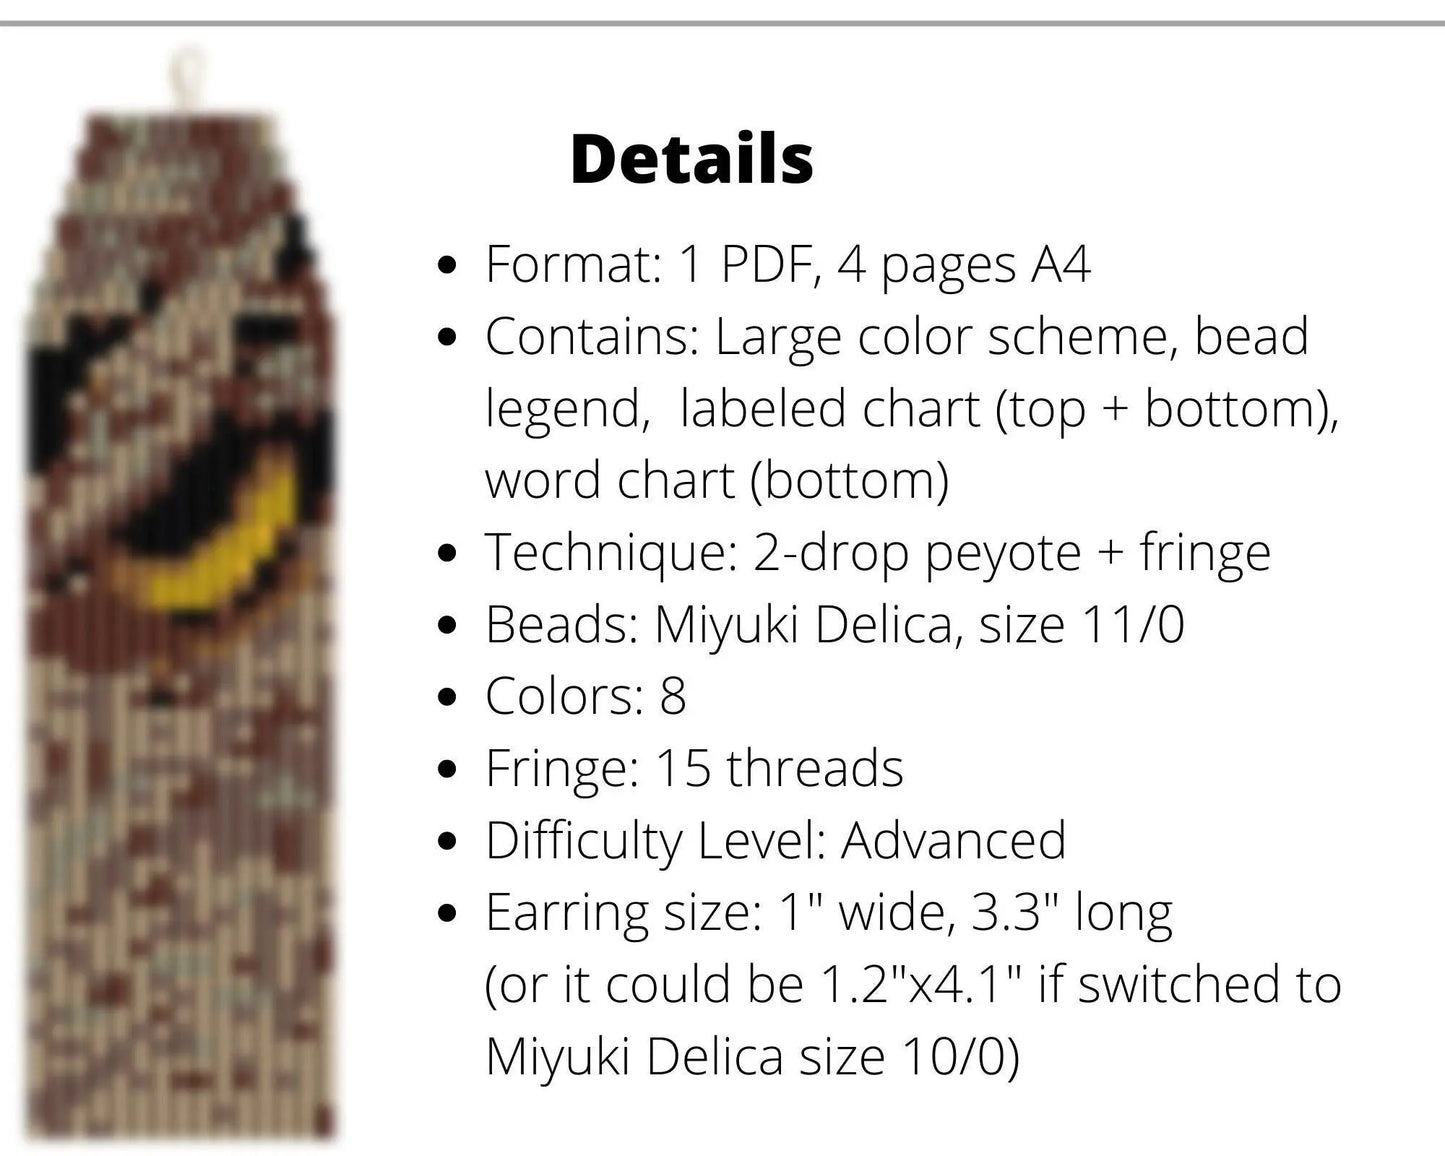 Owl Eye Brick Stitch pattern for fringe beaded earrings - NikoBeadsUA